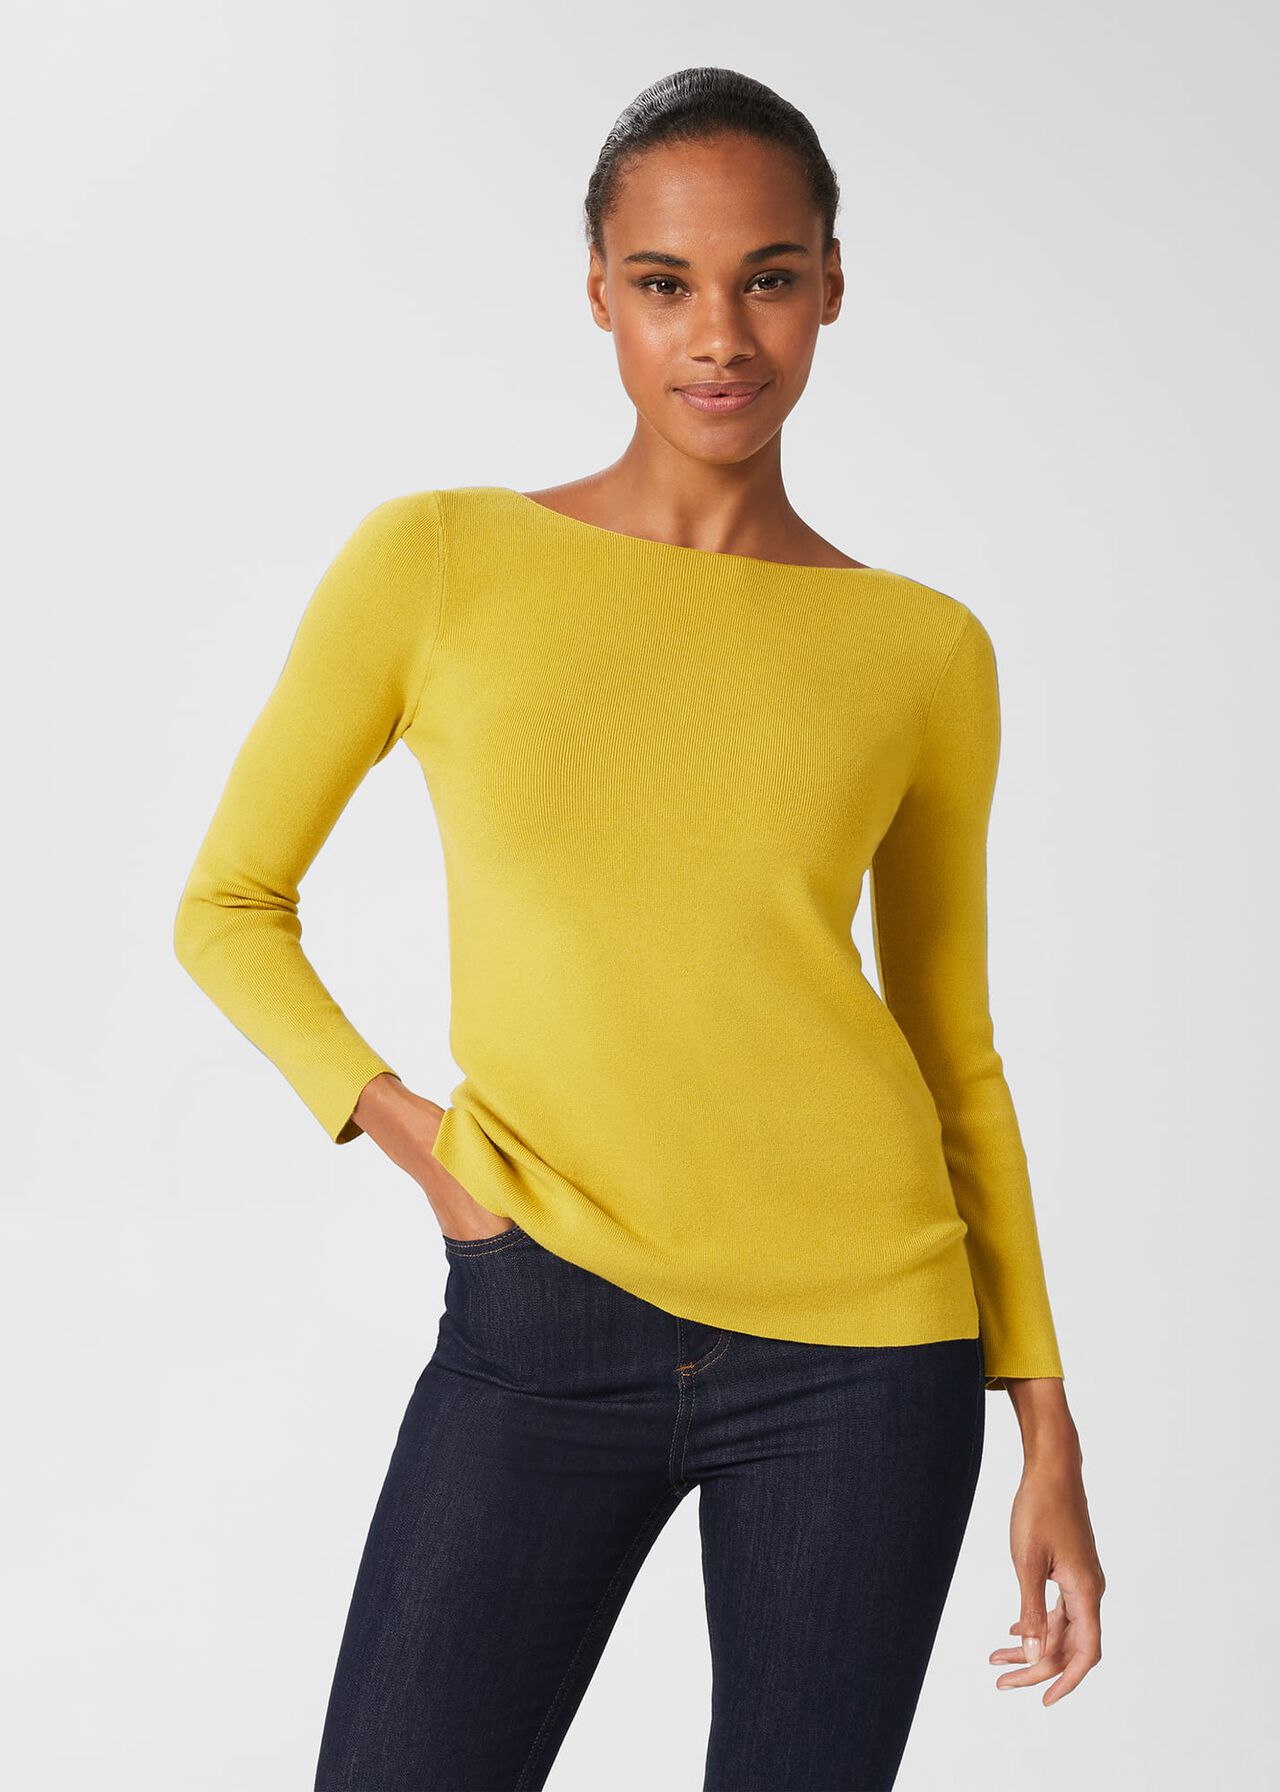 Cesci Sweater, Lemon Yellow, hi-res